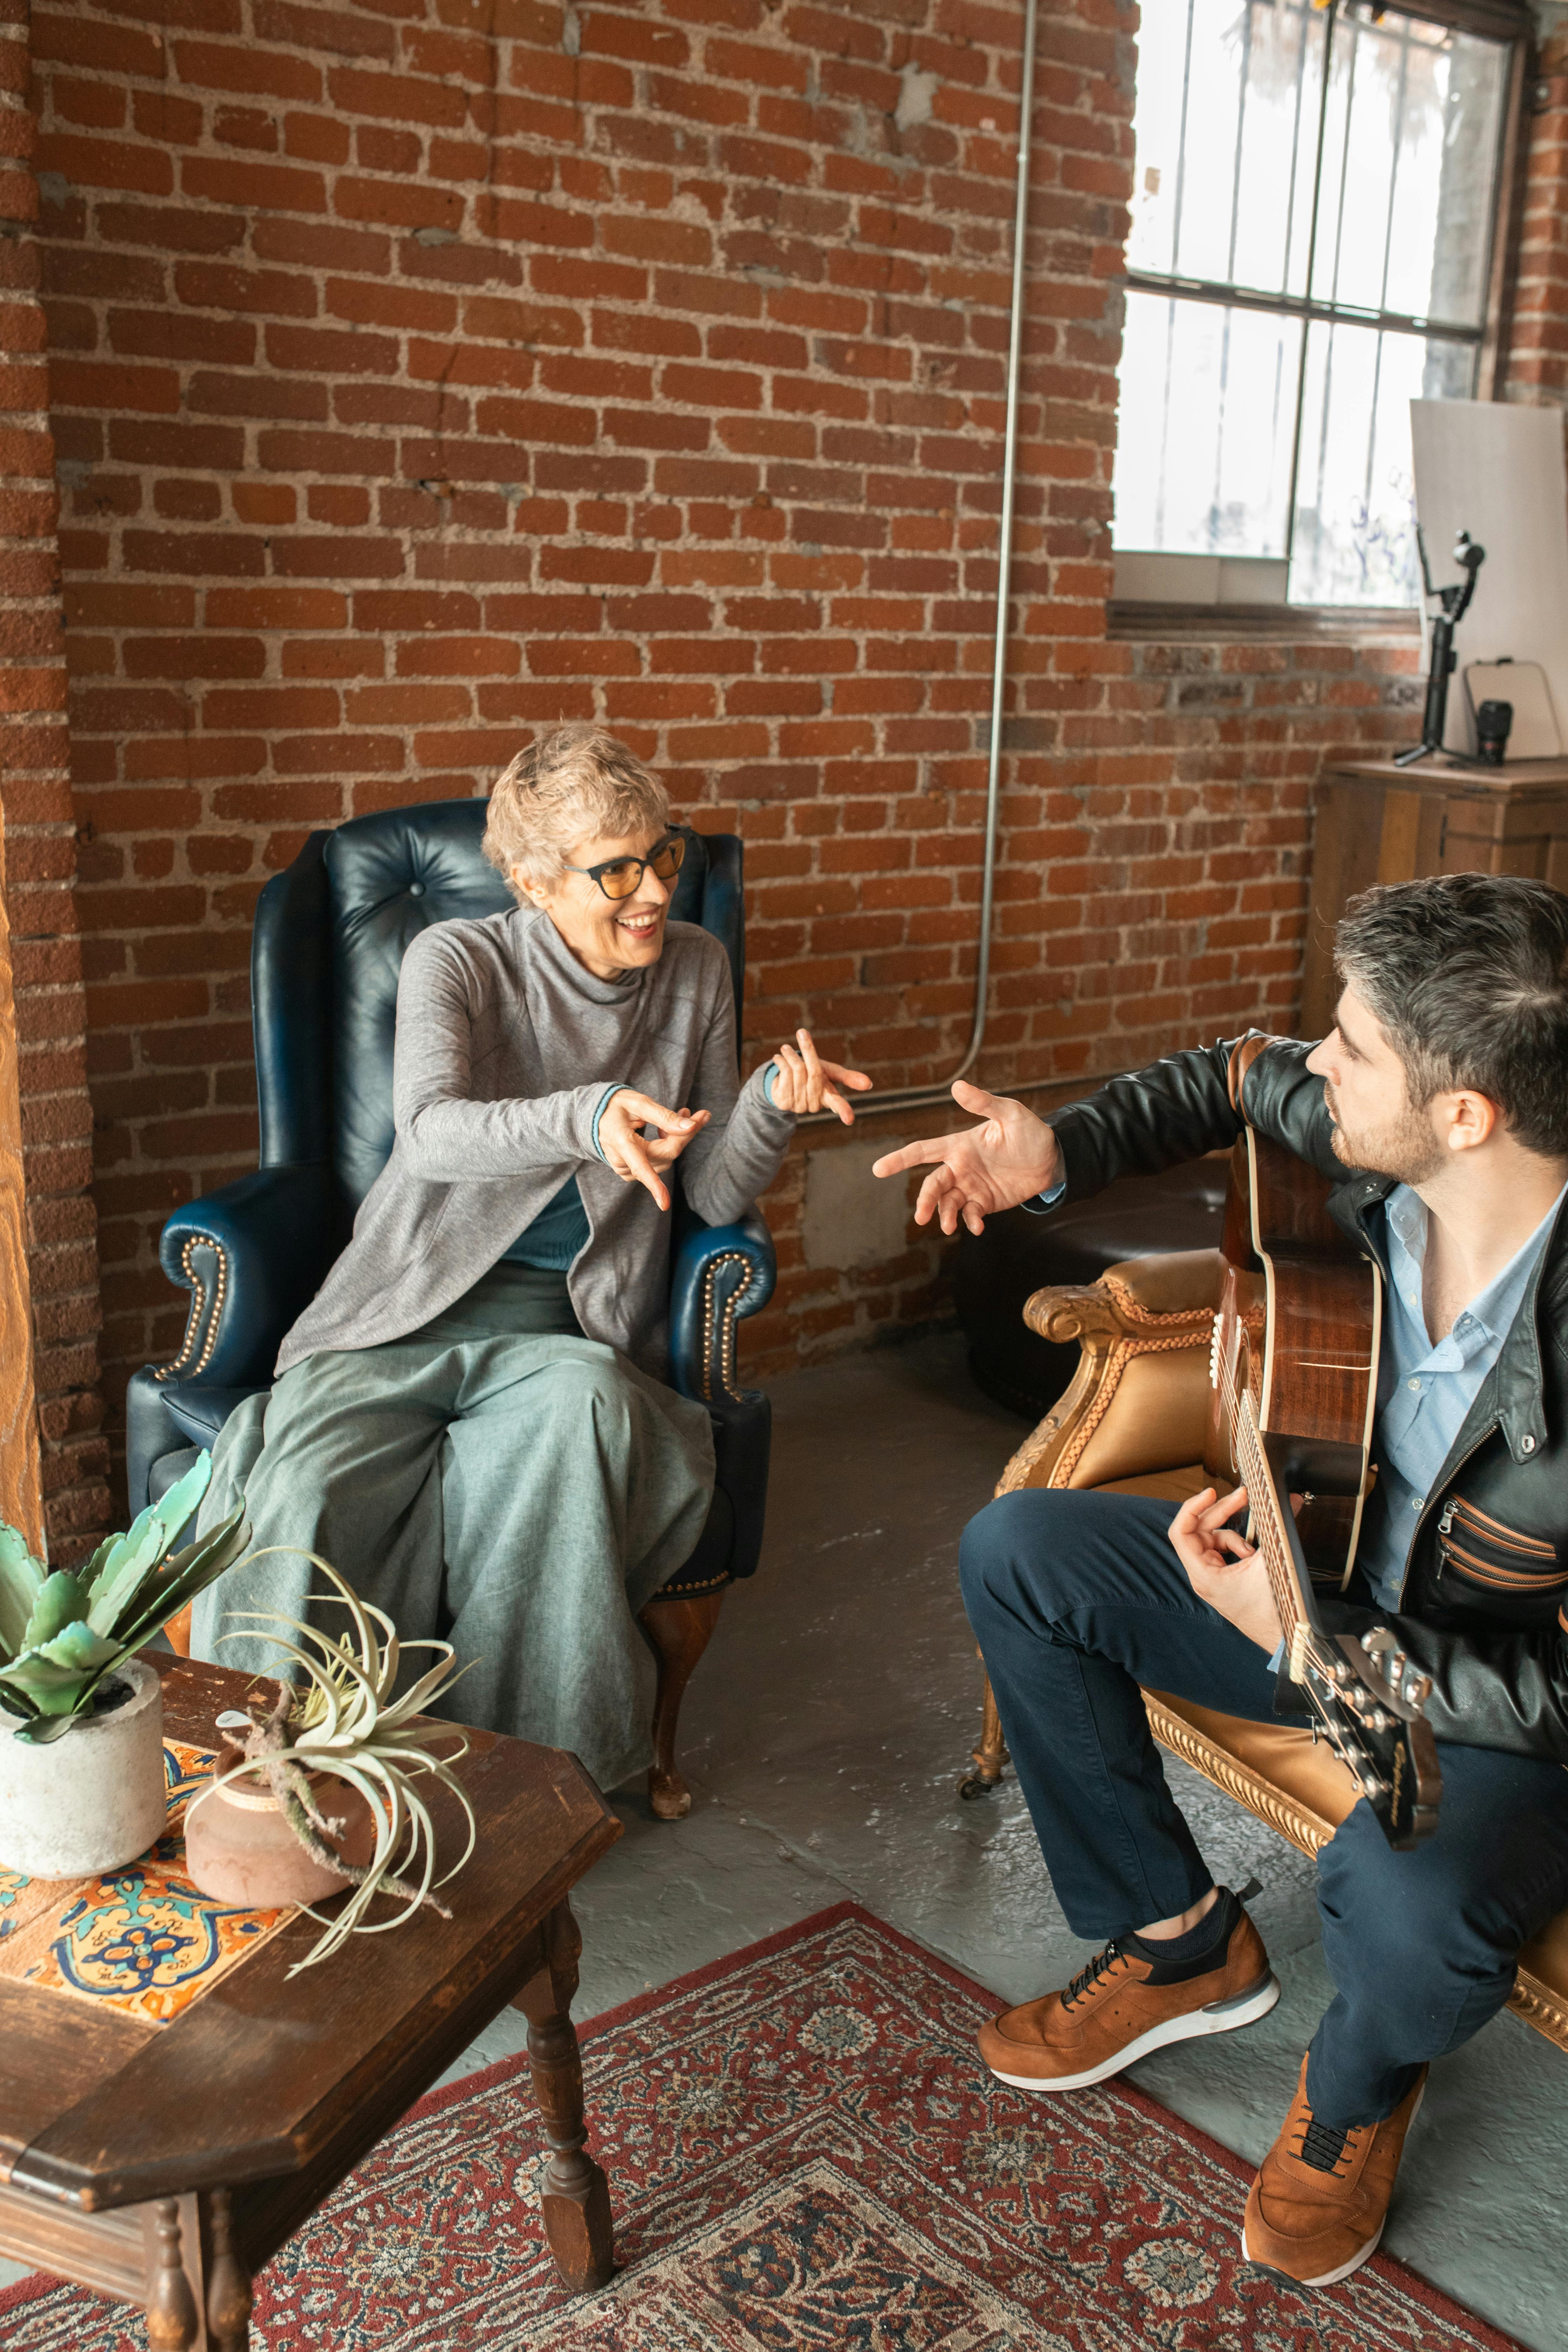 An elderly woman speaking to a man | Source: Pexels